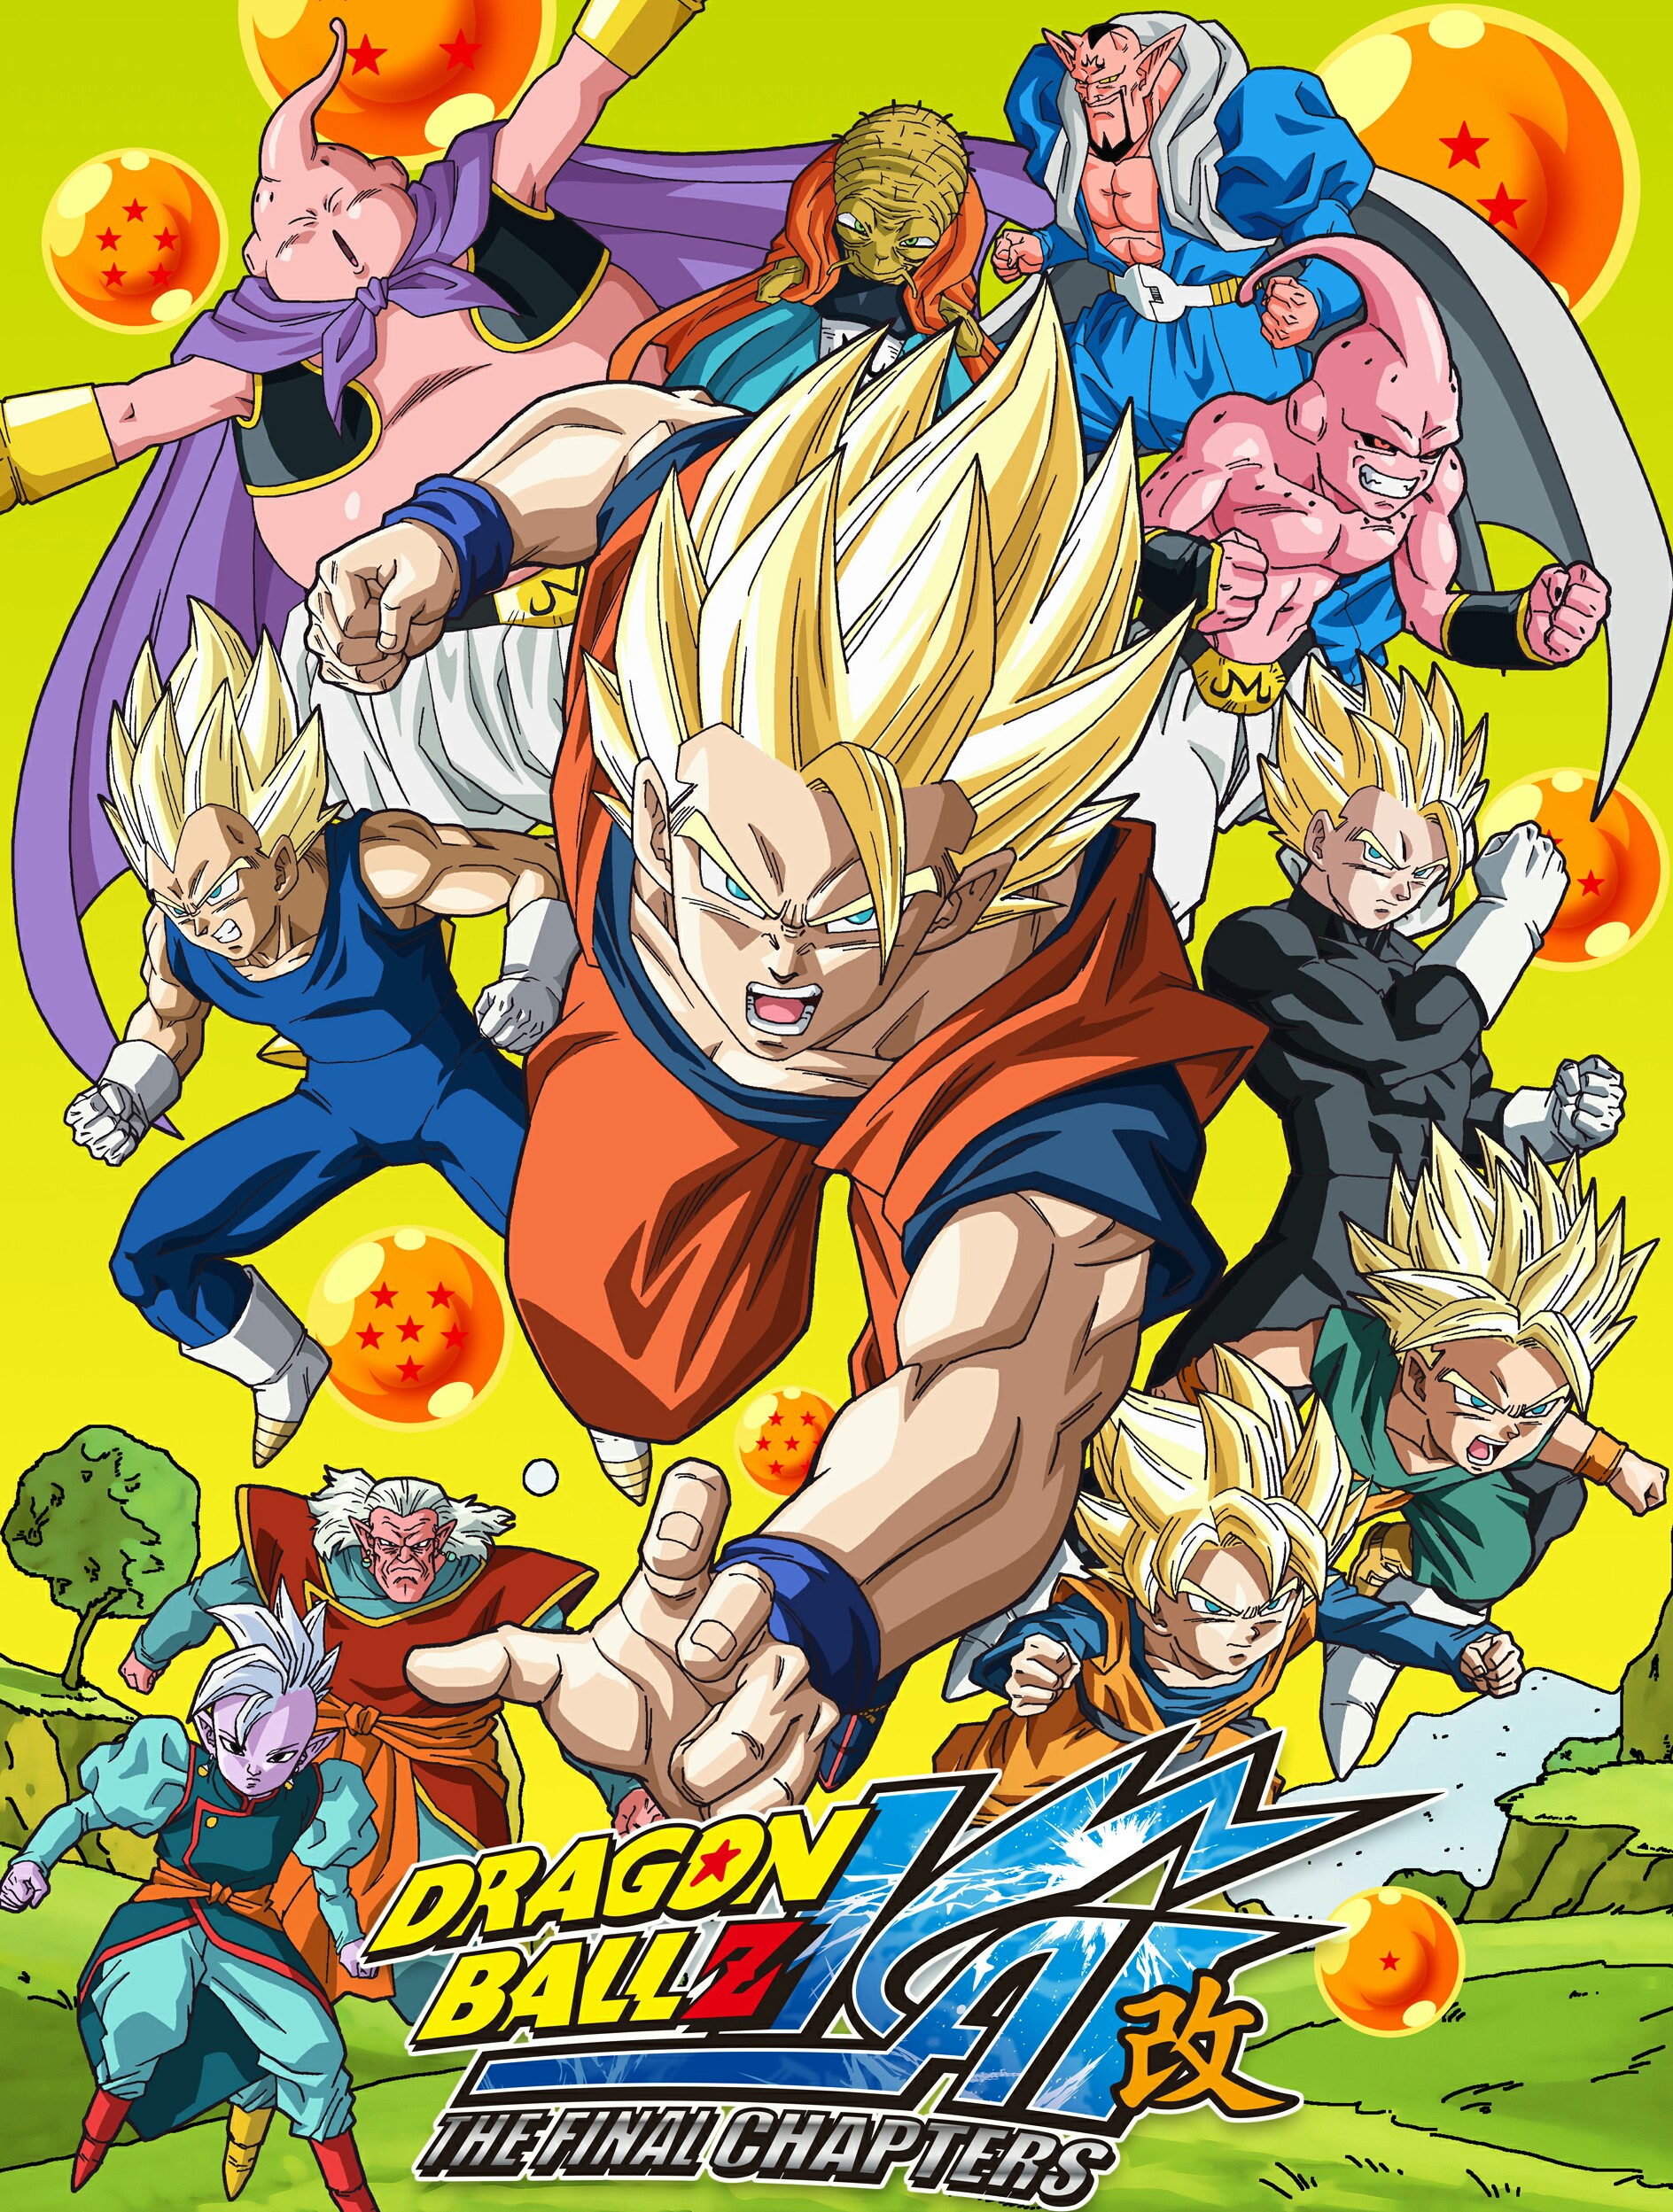 Dragon Ball Z Kai: Los capítulos finales | Doblaje Wiki | FANDOM powered by Wikia